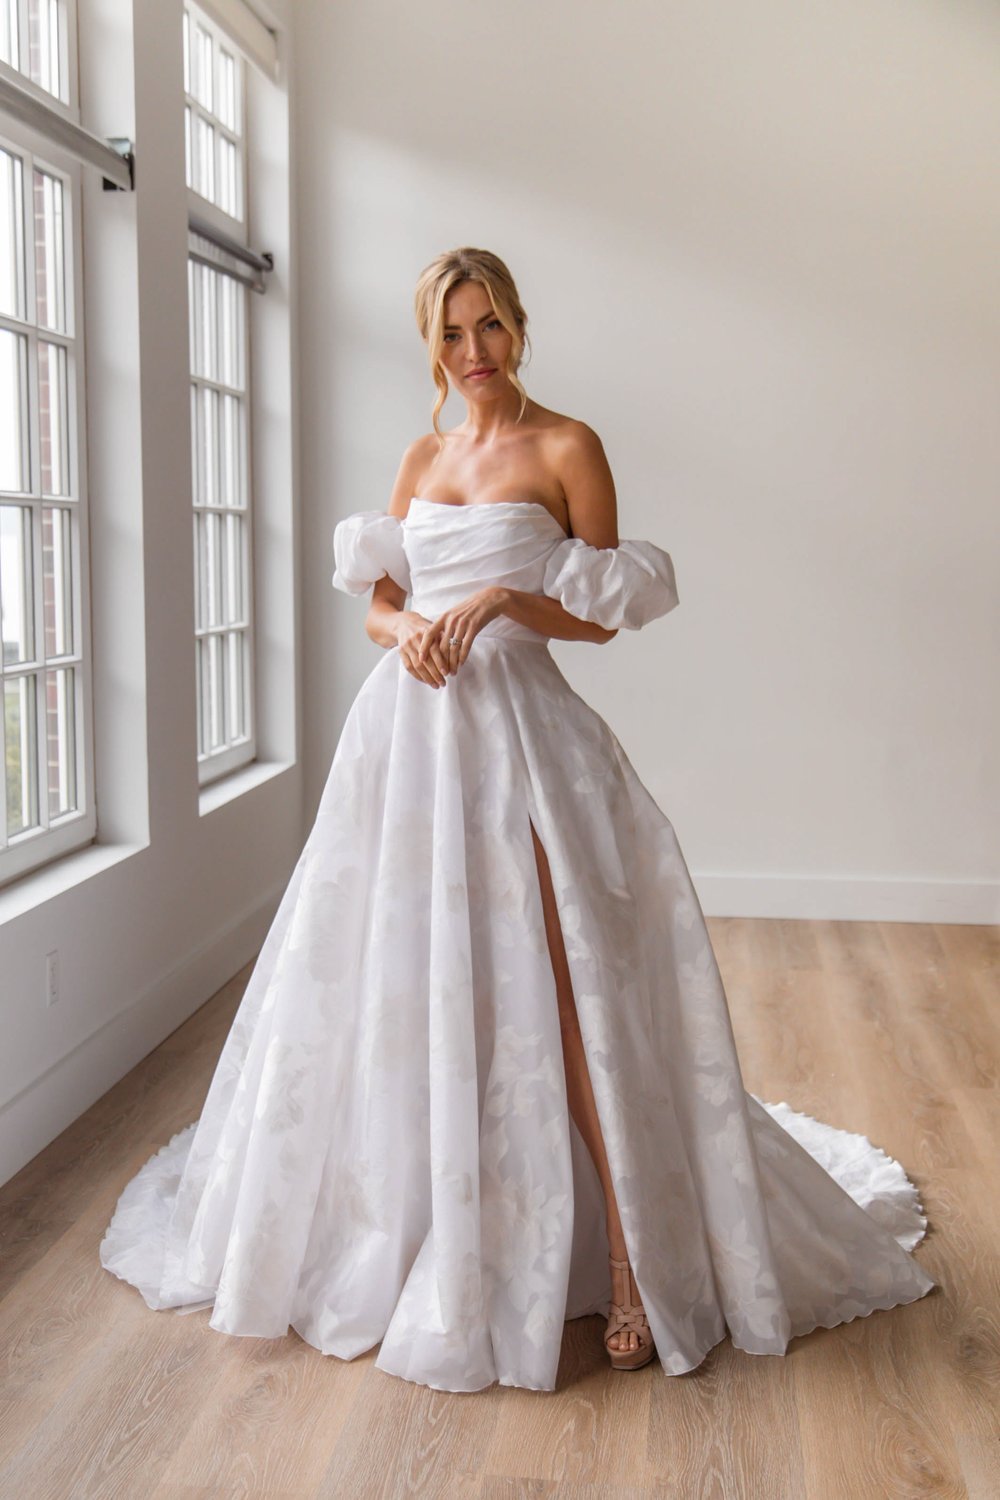 blanc-de-blanc-bridal-boutique-pittsburgh-dress-wedding-gown-Giselle_Rebecca Schoneveld (1).jpeg